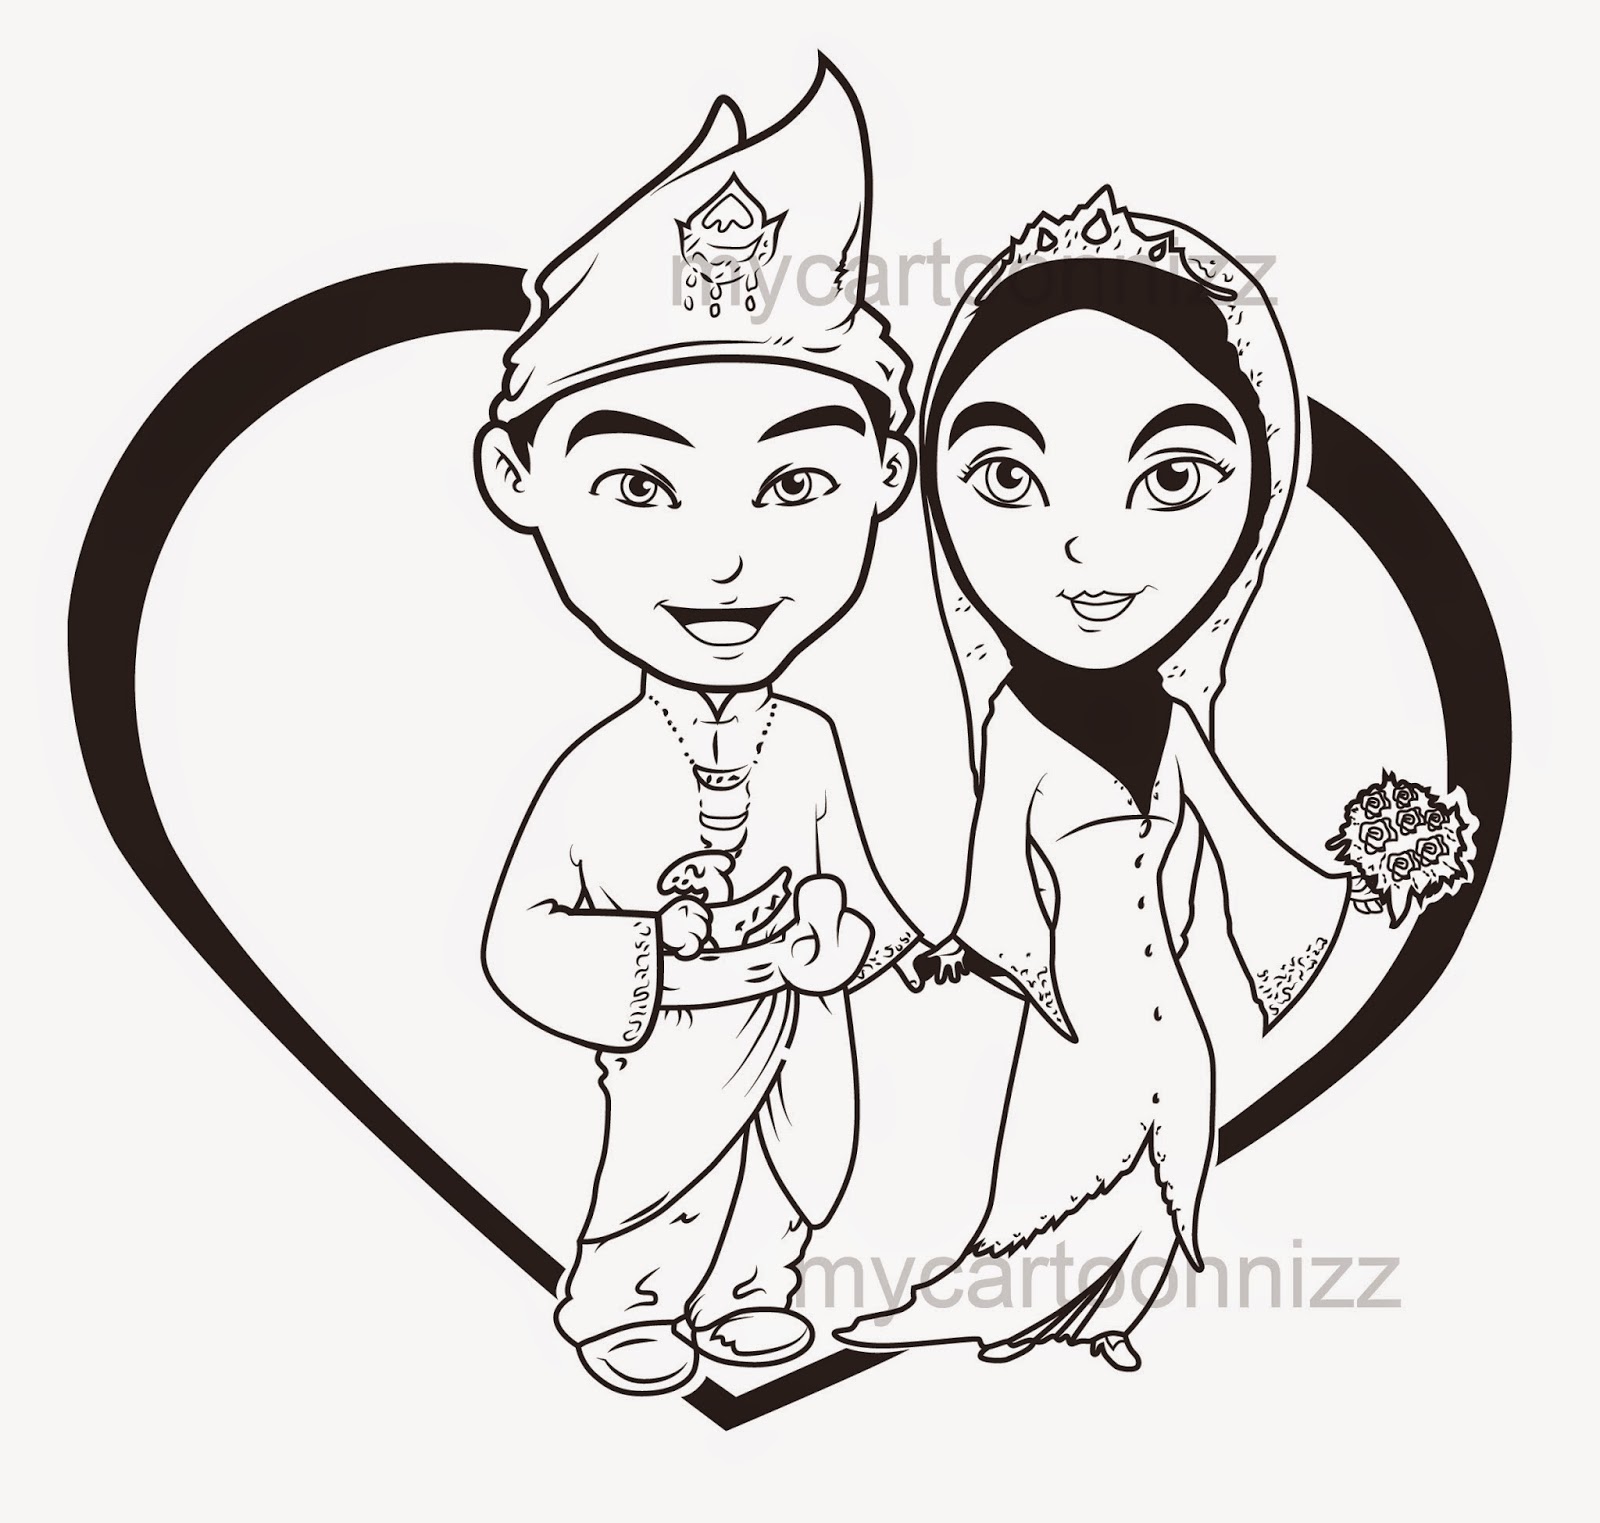  Gambar  Kartun  Muslimah Kahwin Kantor Meme